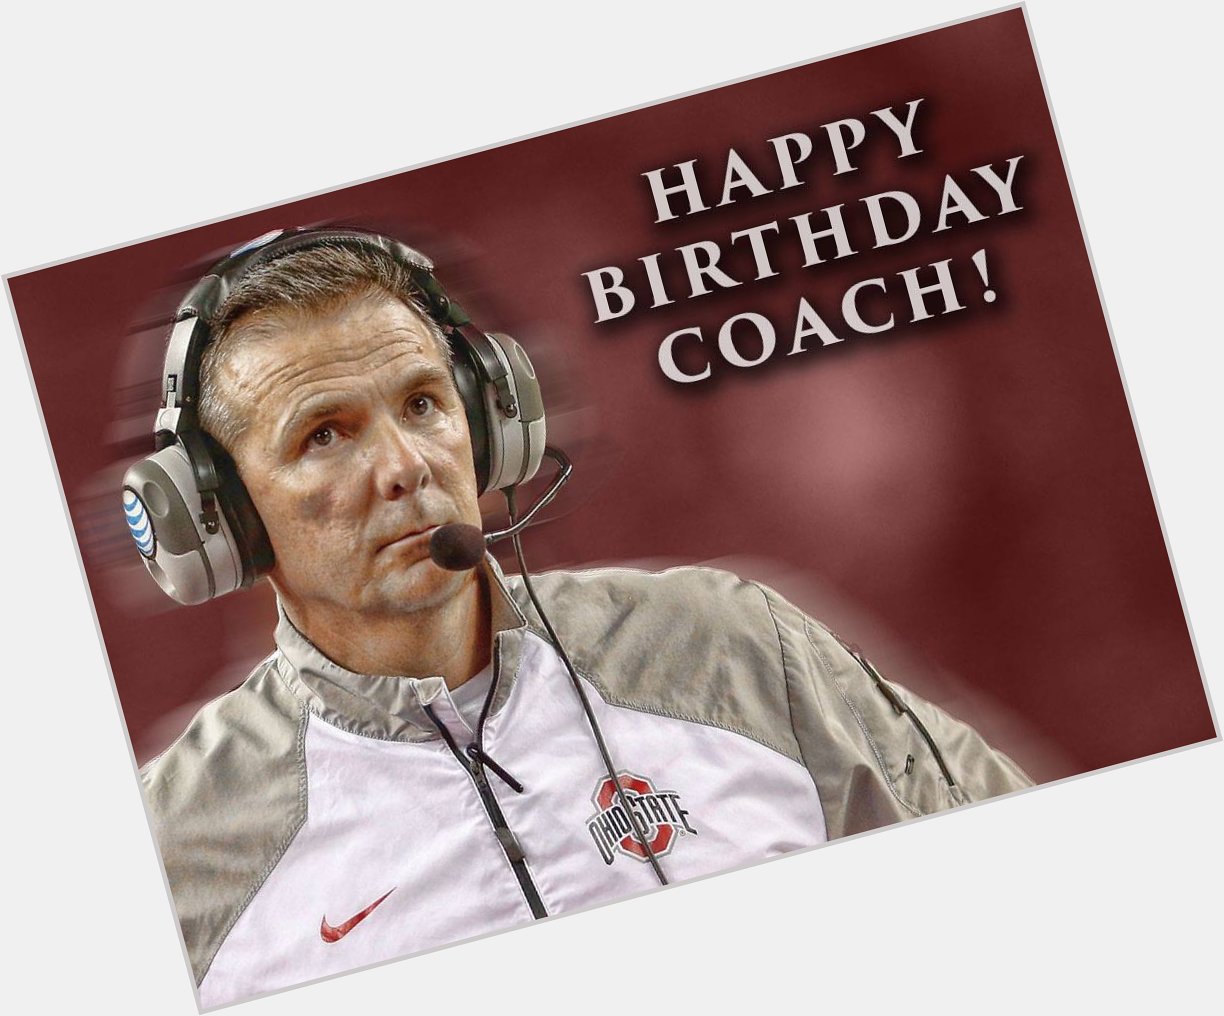 Remessage to wish Coach Urban Meyer a Happy Birthday! O-H 